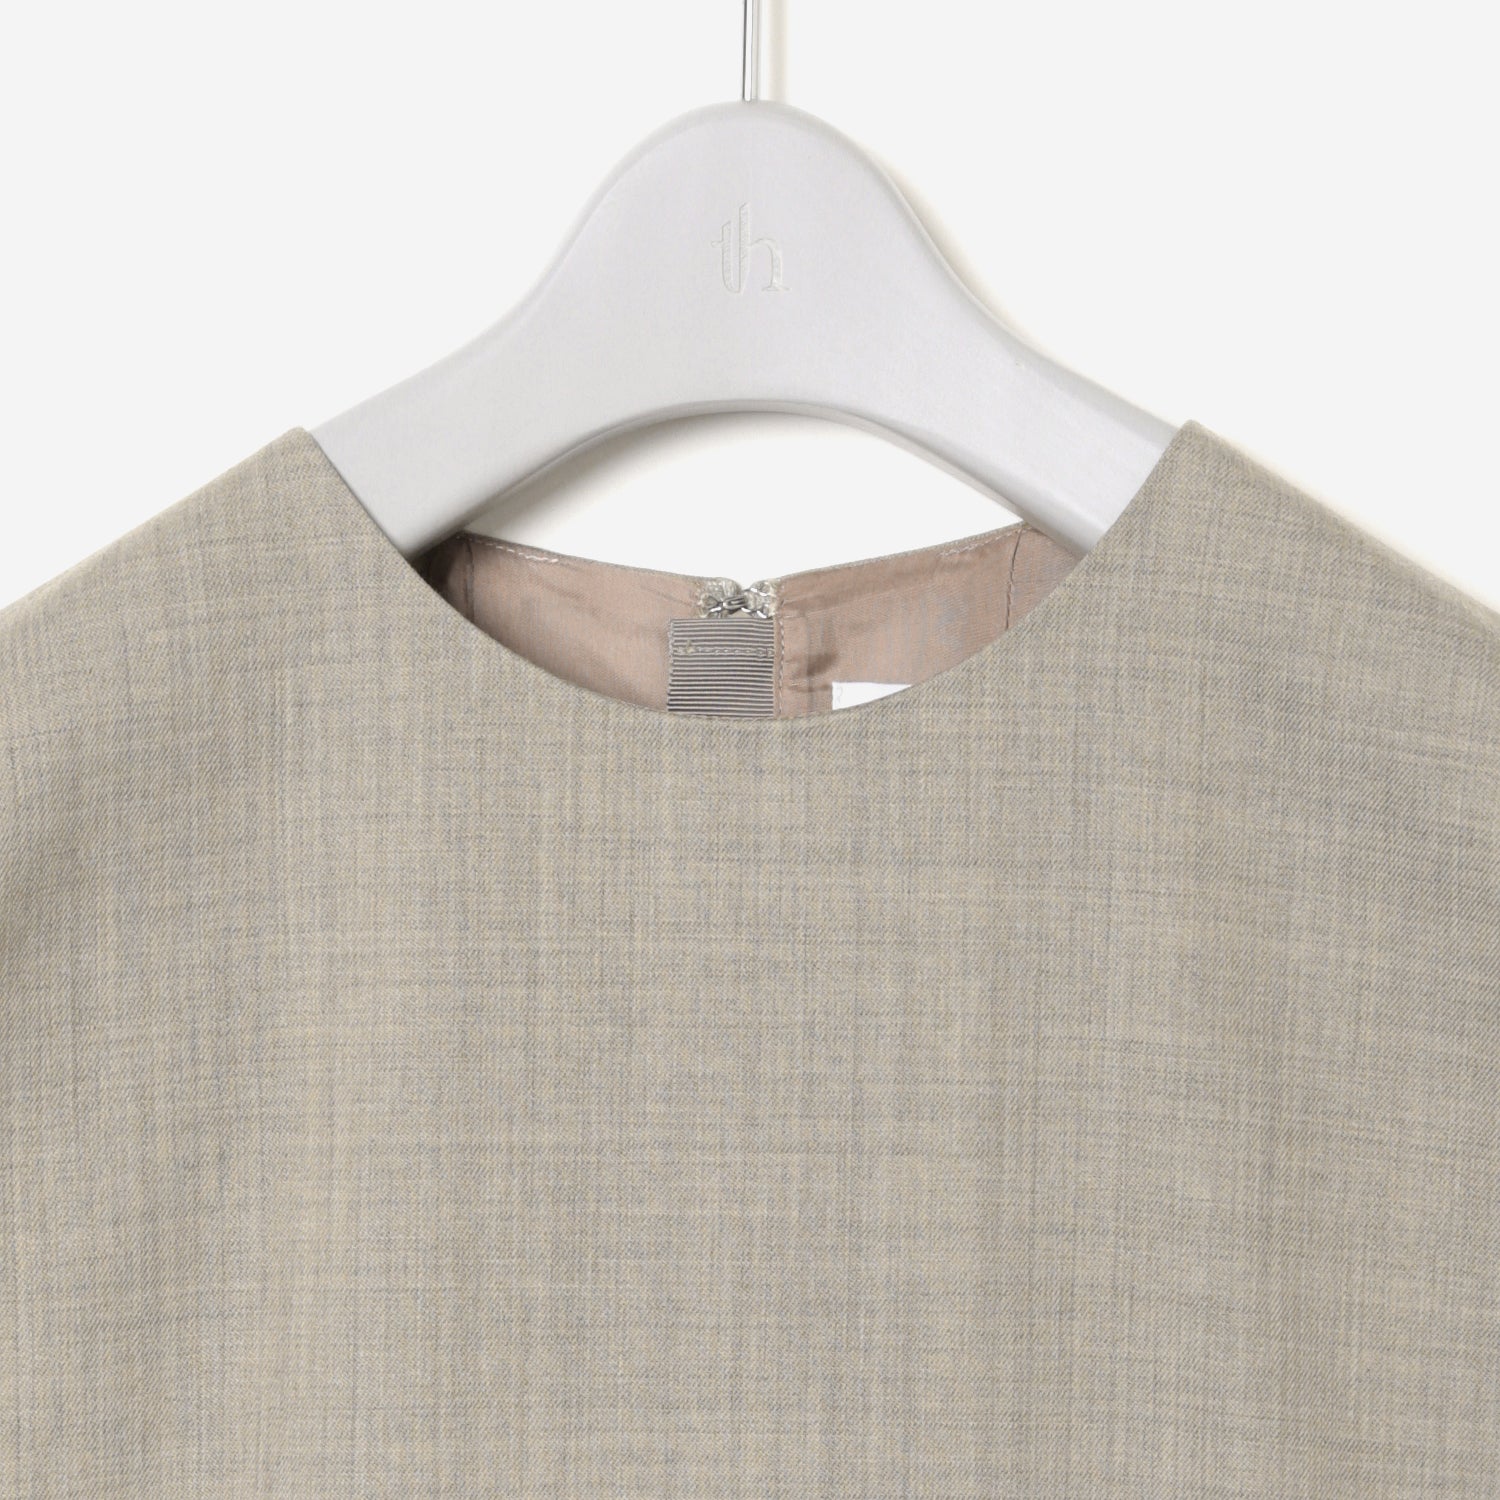 Darts Pocket Dress / beige